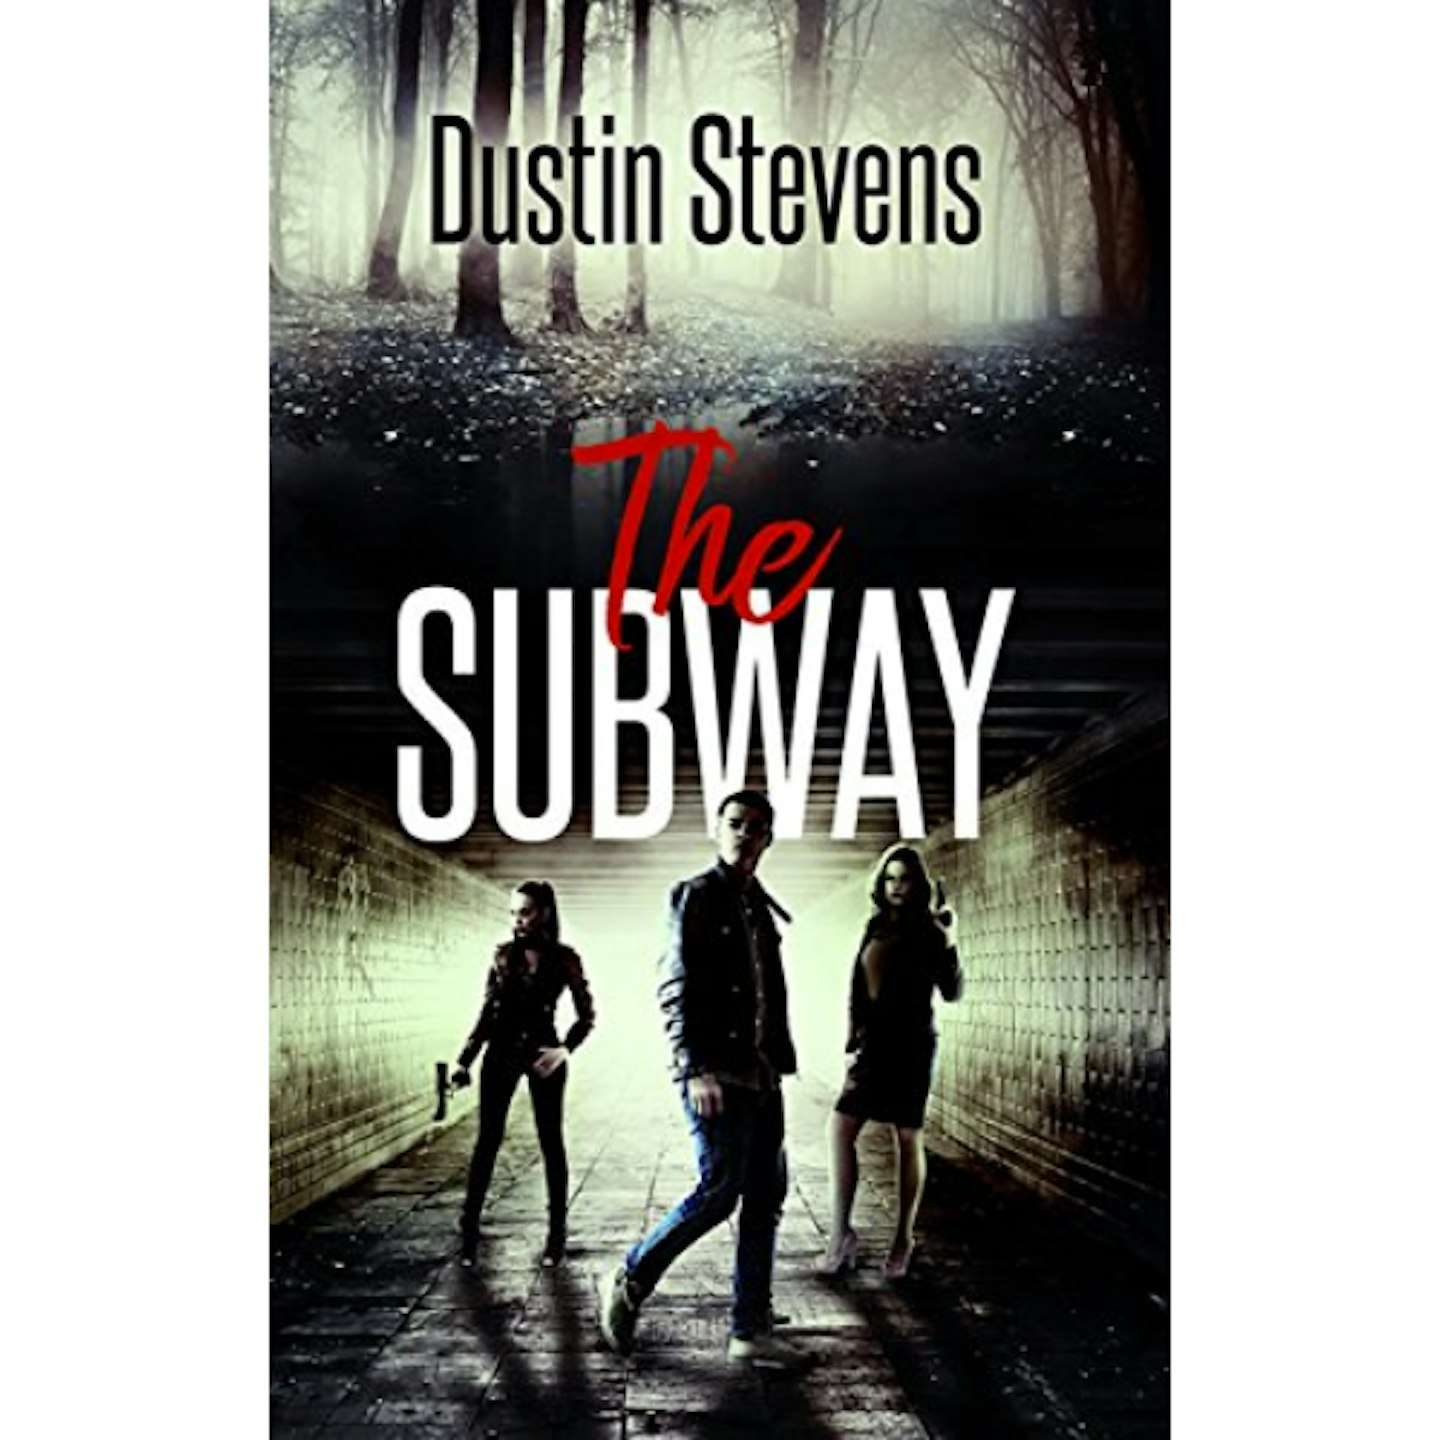 The Subway: A Suspense Thriller by Dustin Stevens